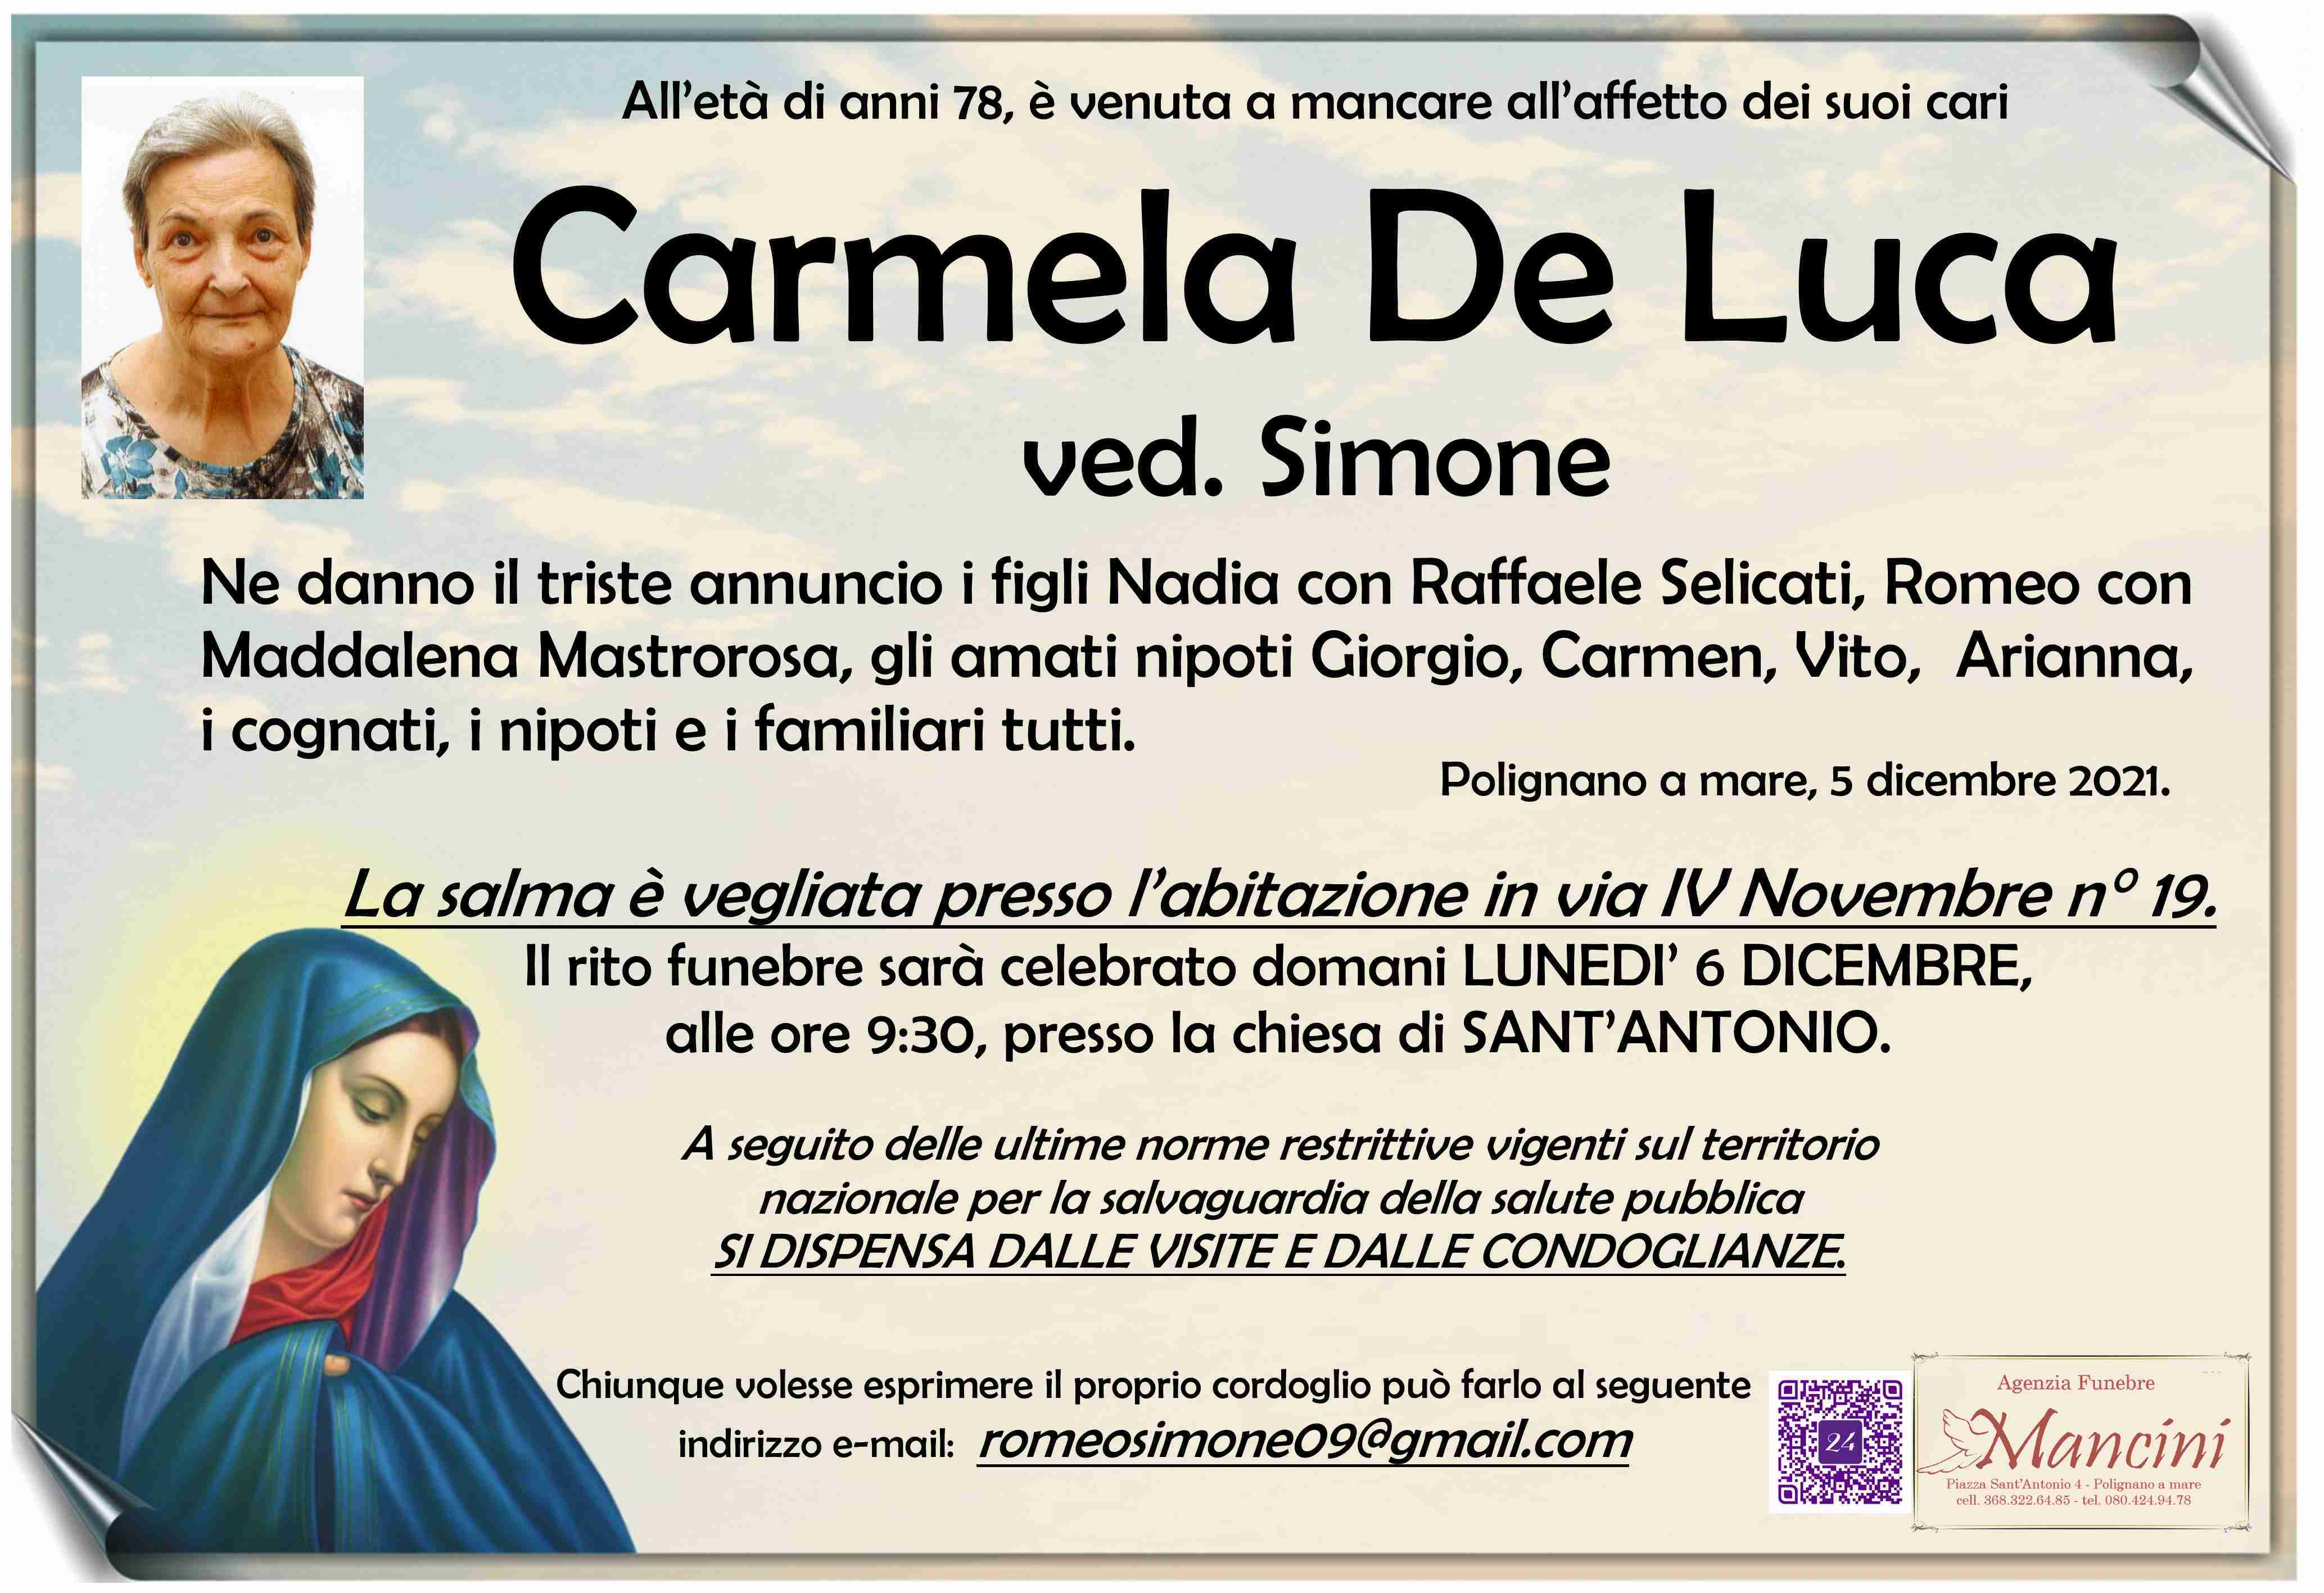 Carmela De Luca